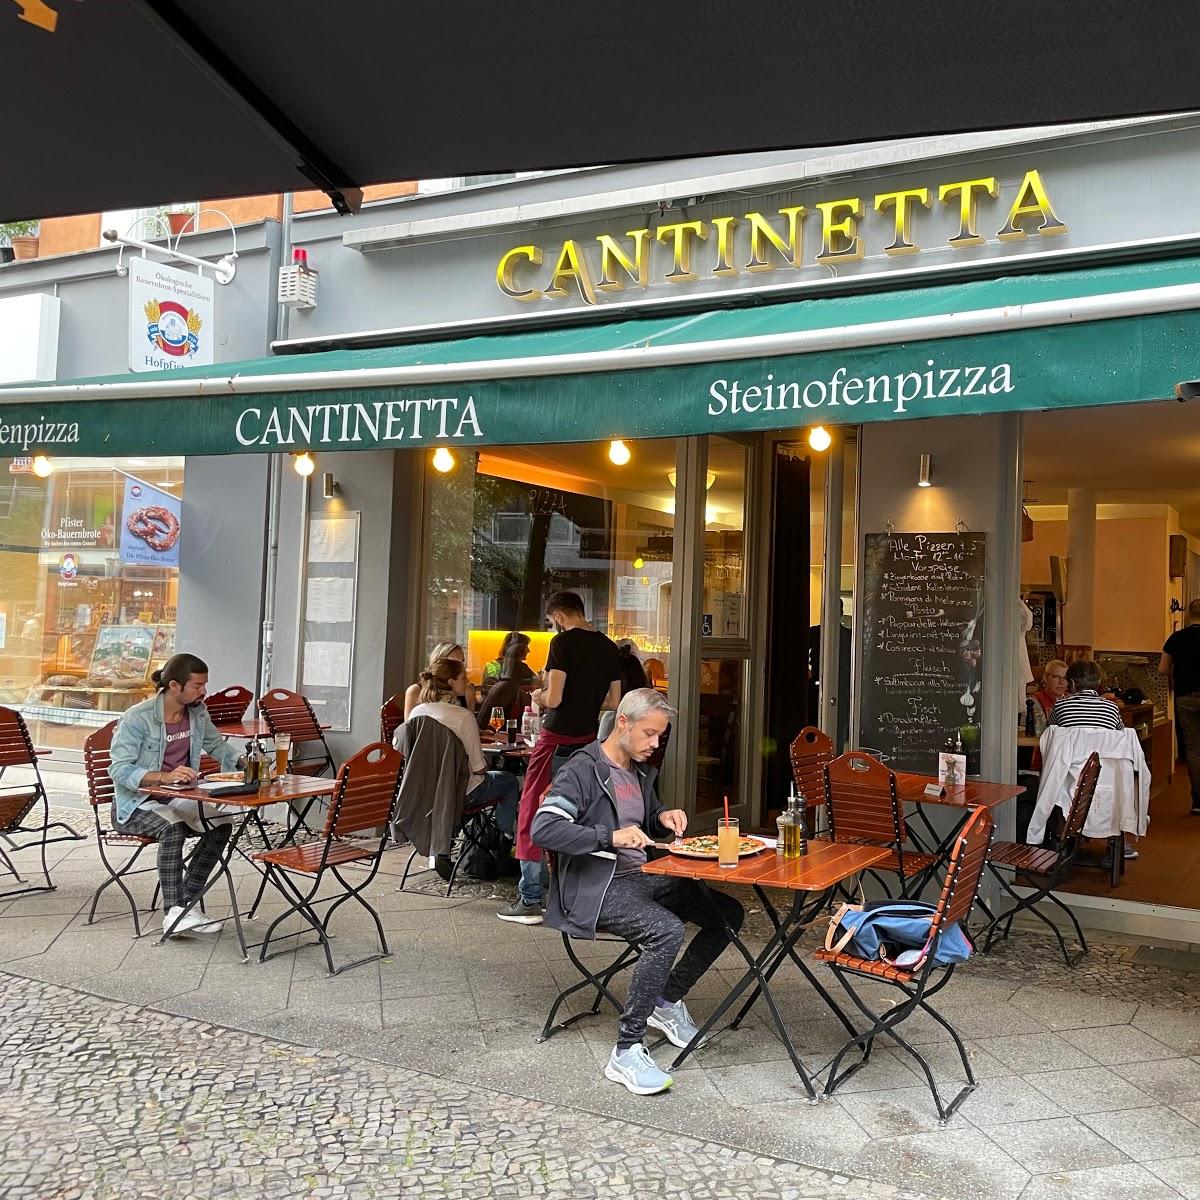 Restaurant "Cantinetta" in Berlin